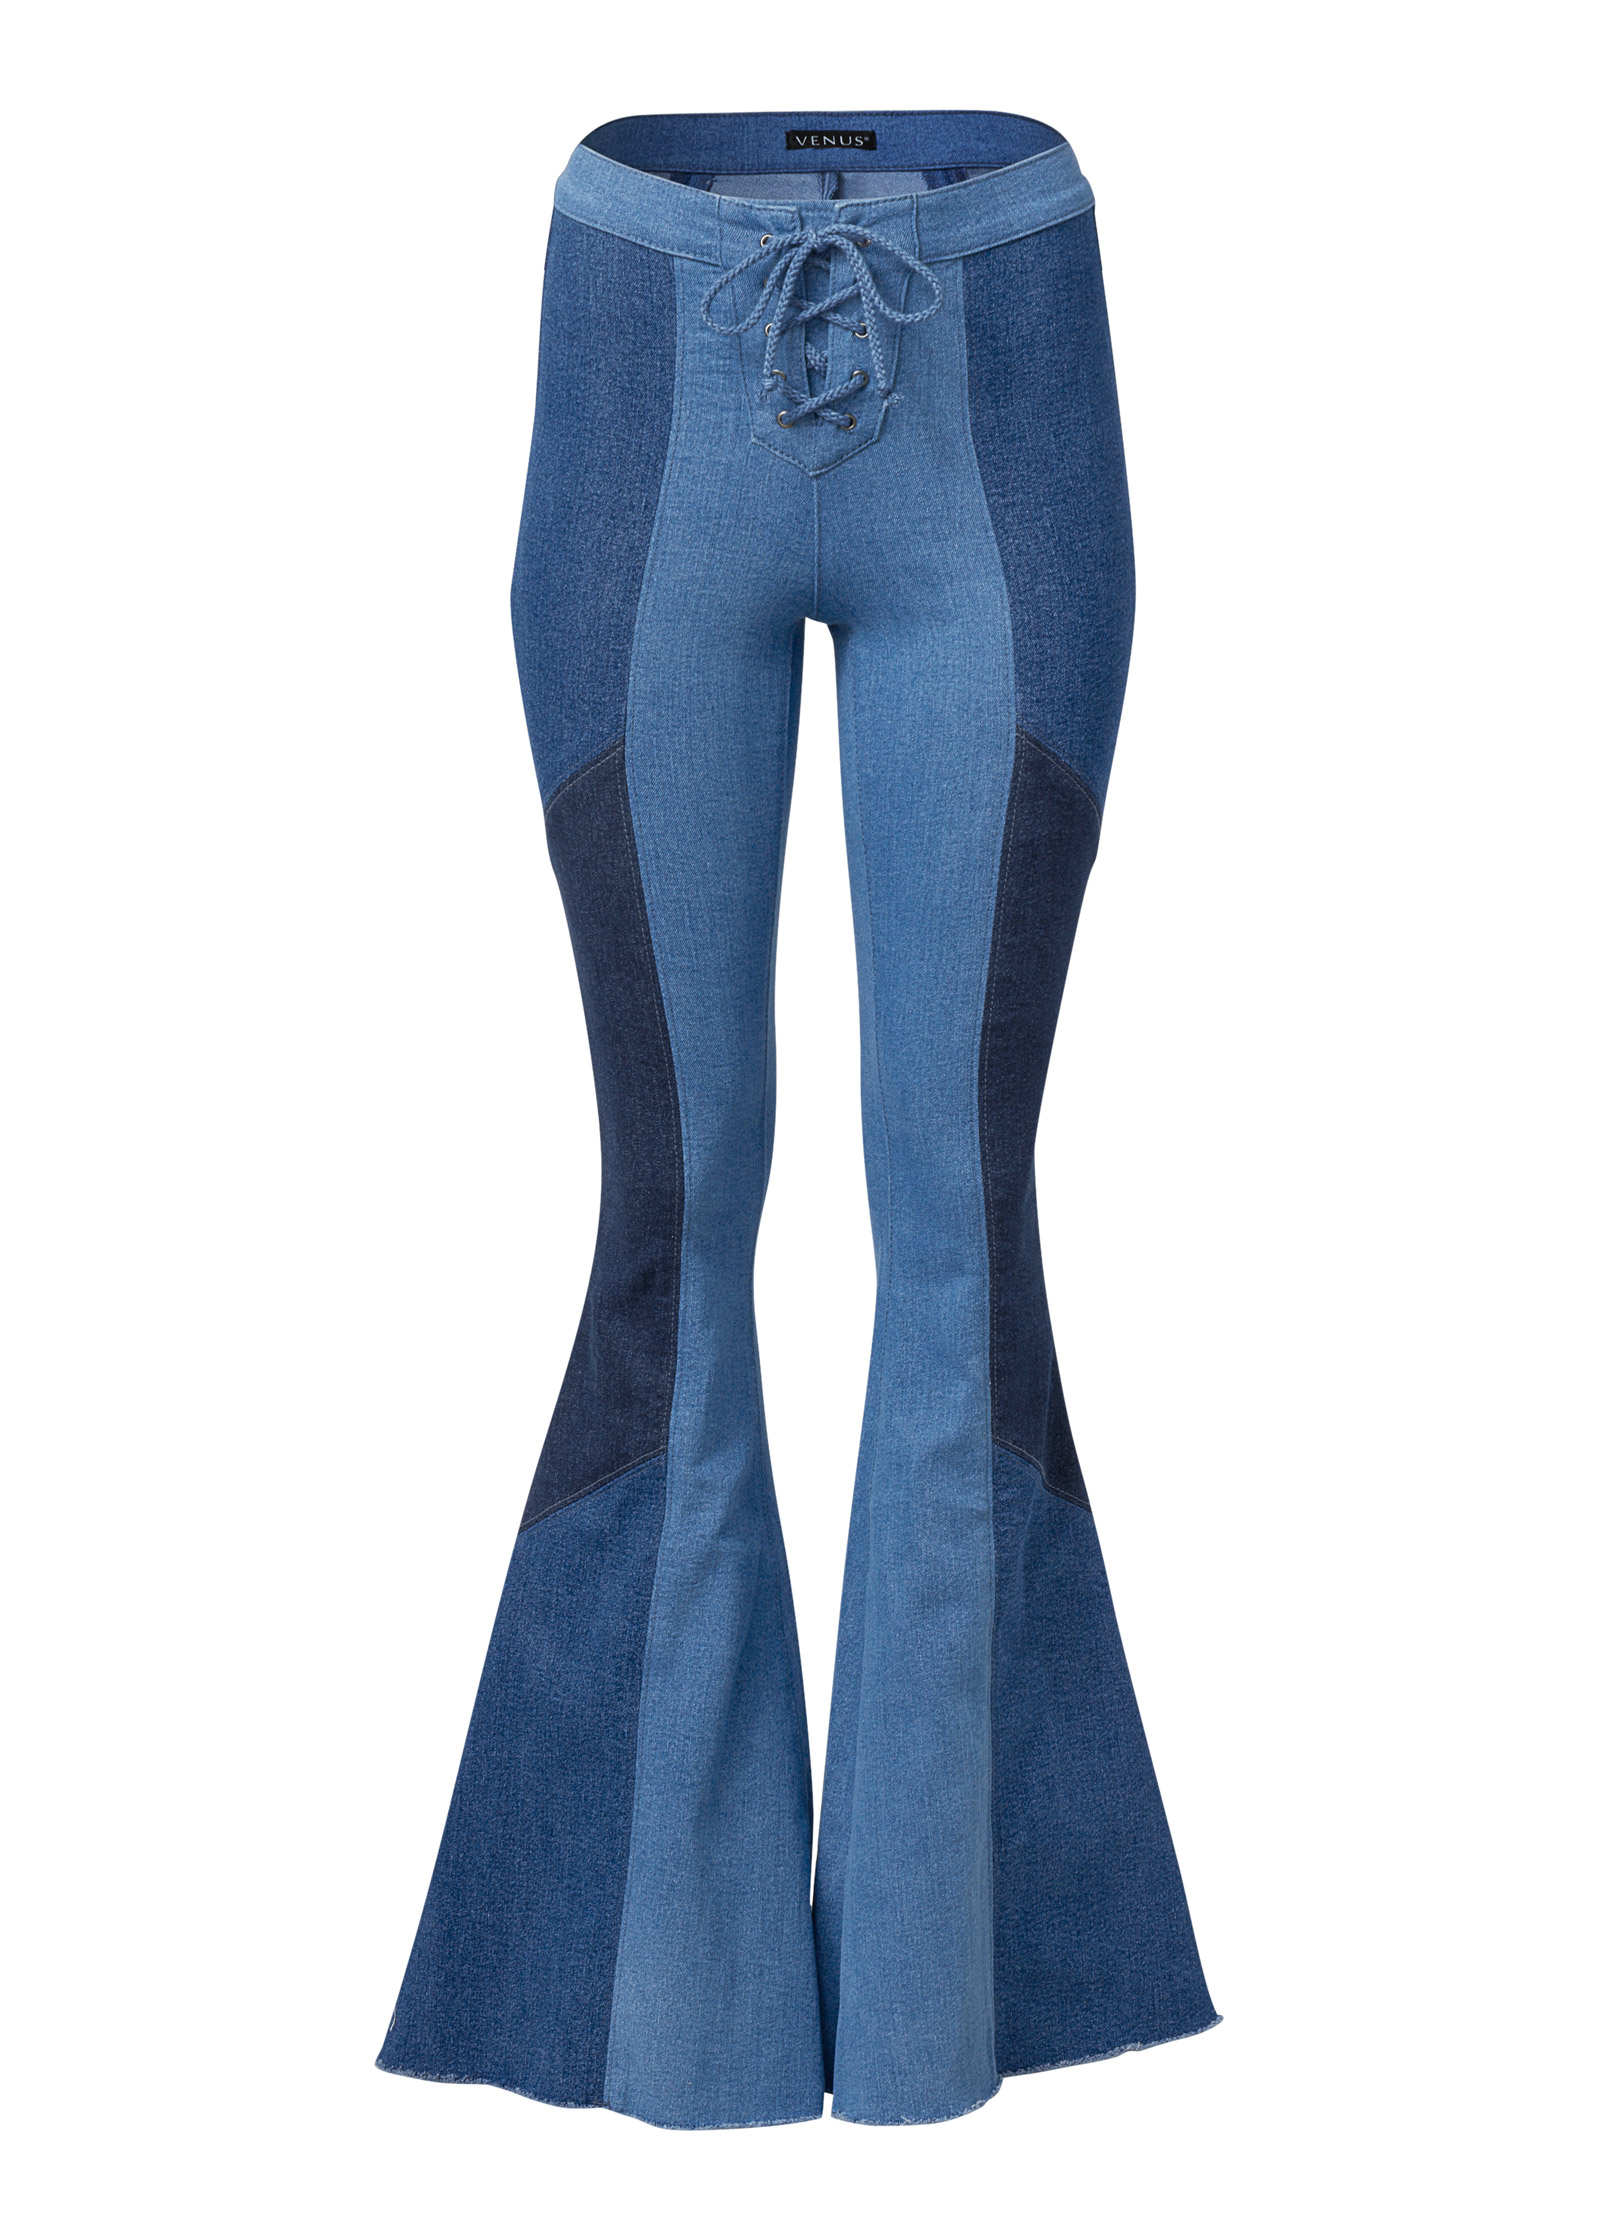 Color Block Flare Jeans in Denim Multi - Denim | VENUS